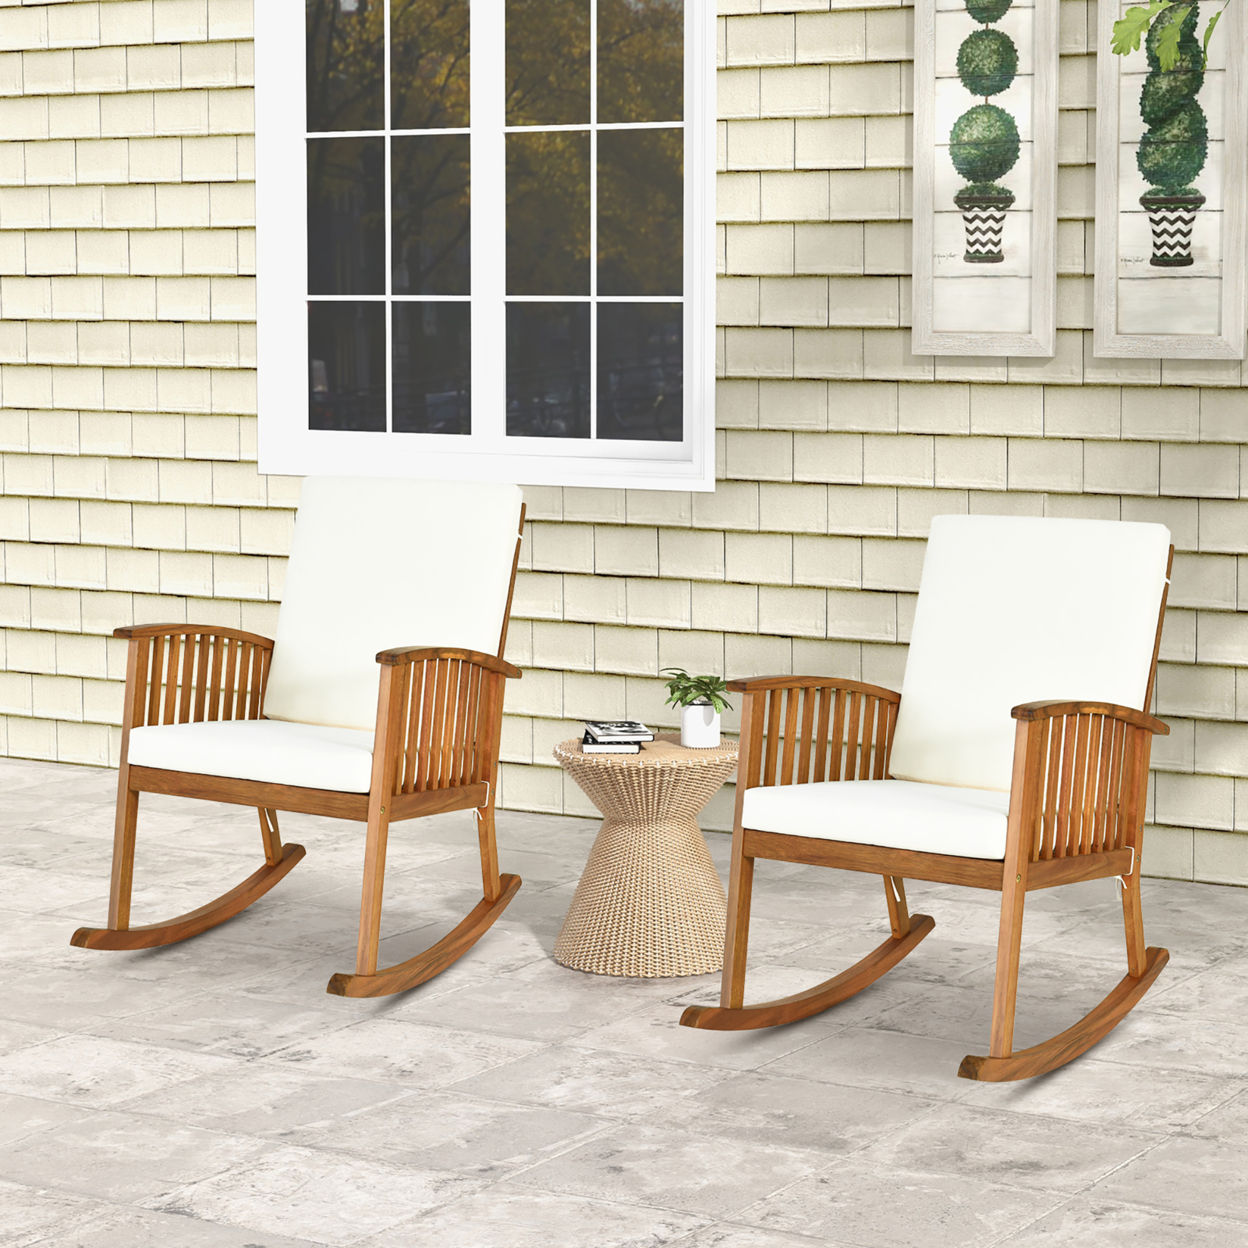 2PCS Patio Wooden Rocking Chair Lawn Garden Outdoor W/ Armrest Cushion